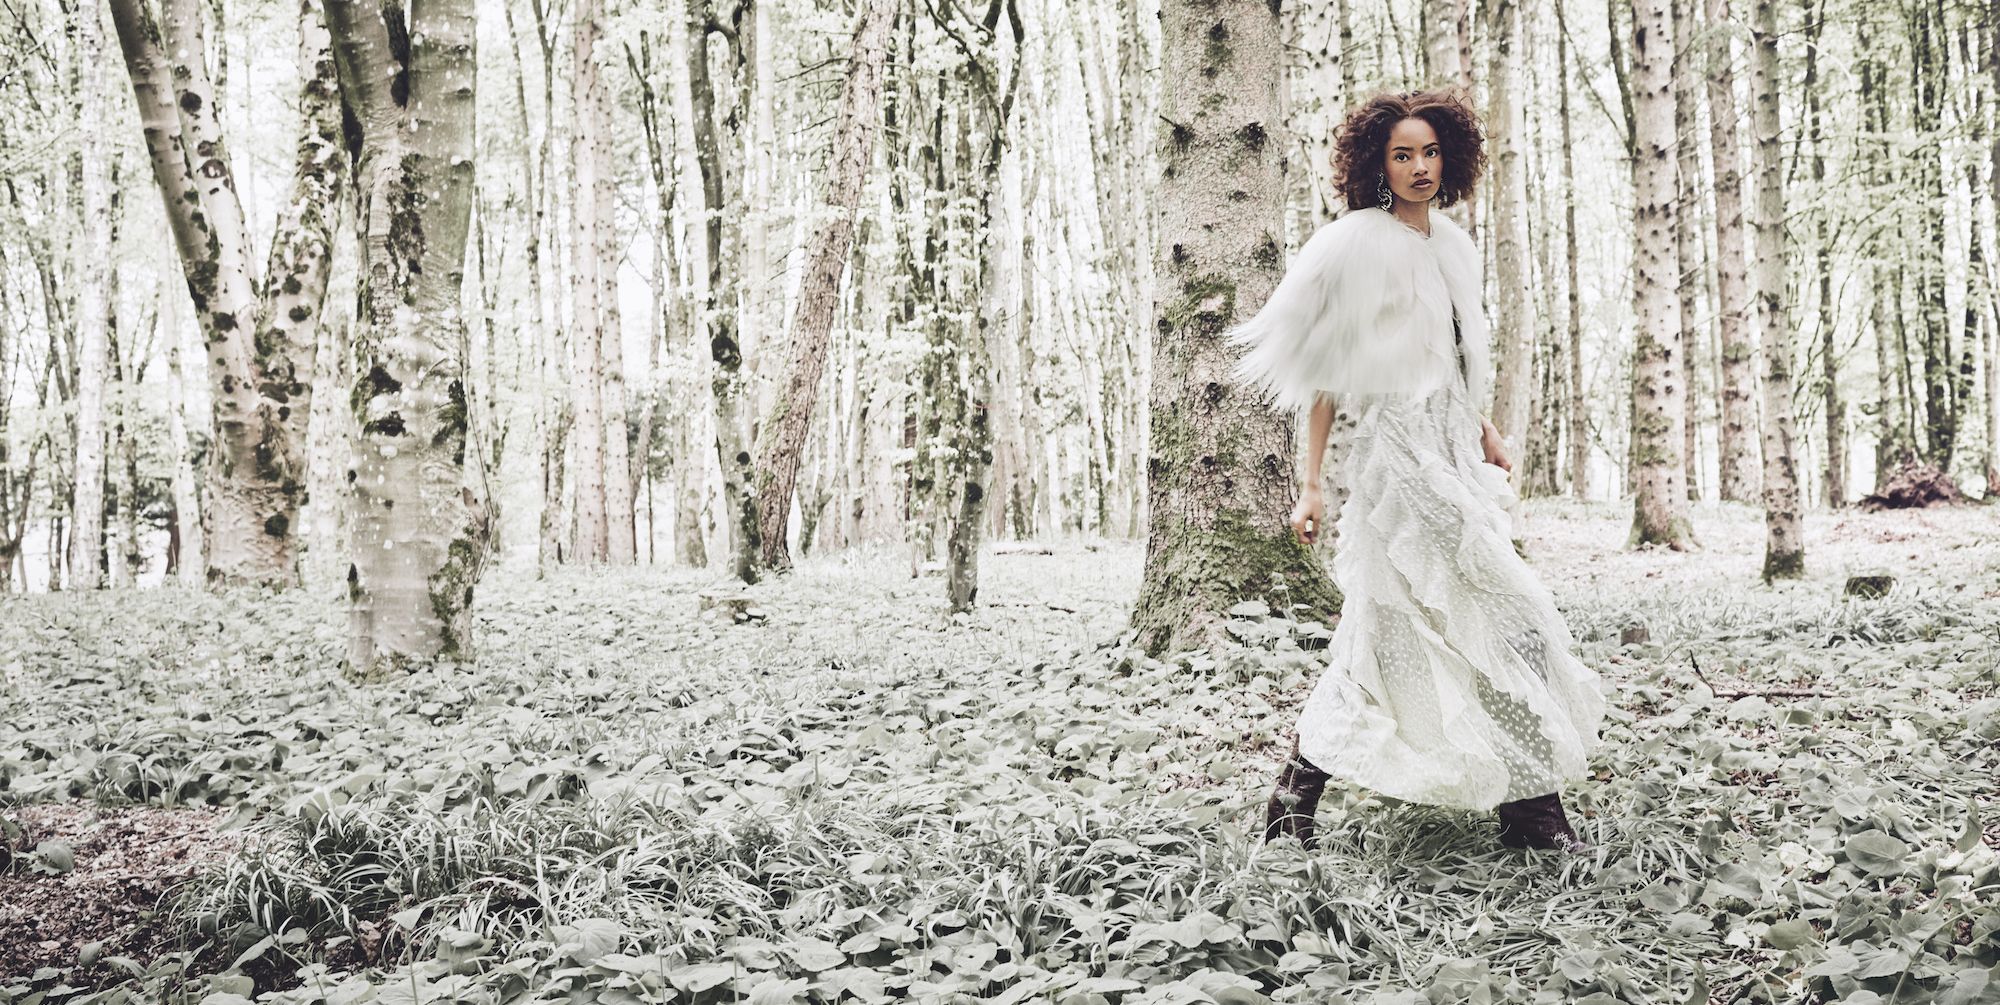 Winter Harper's Bazaar shoot, Valentino dress